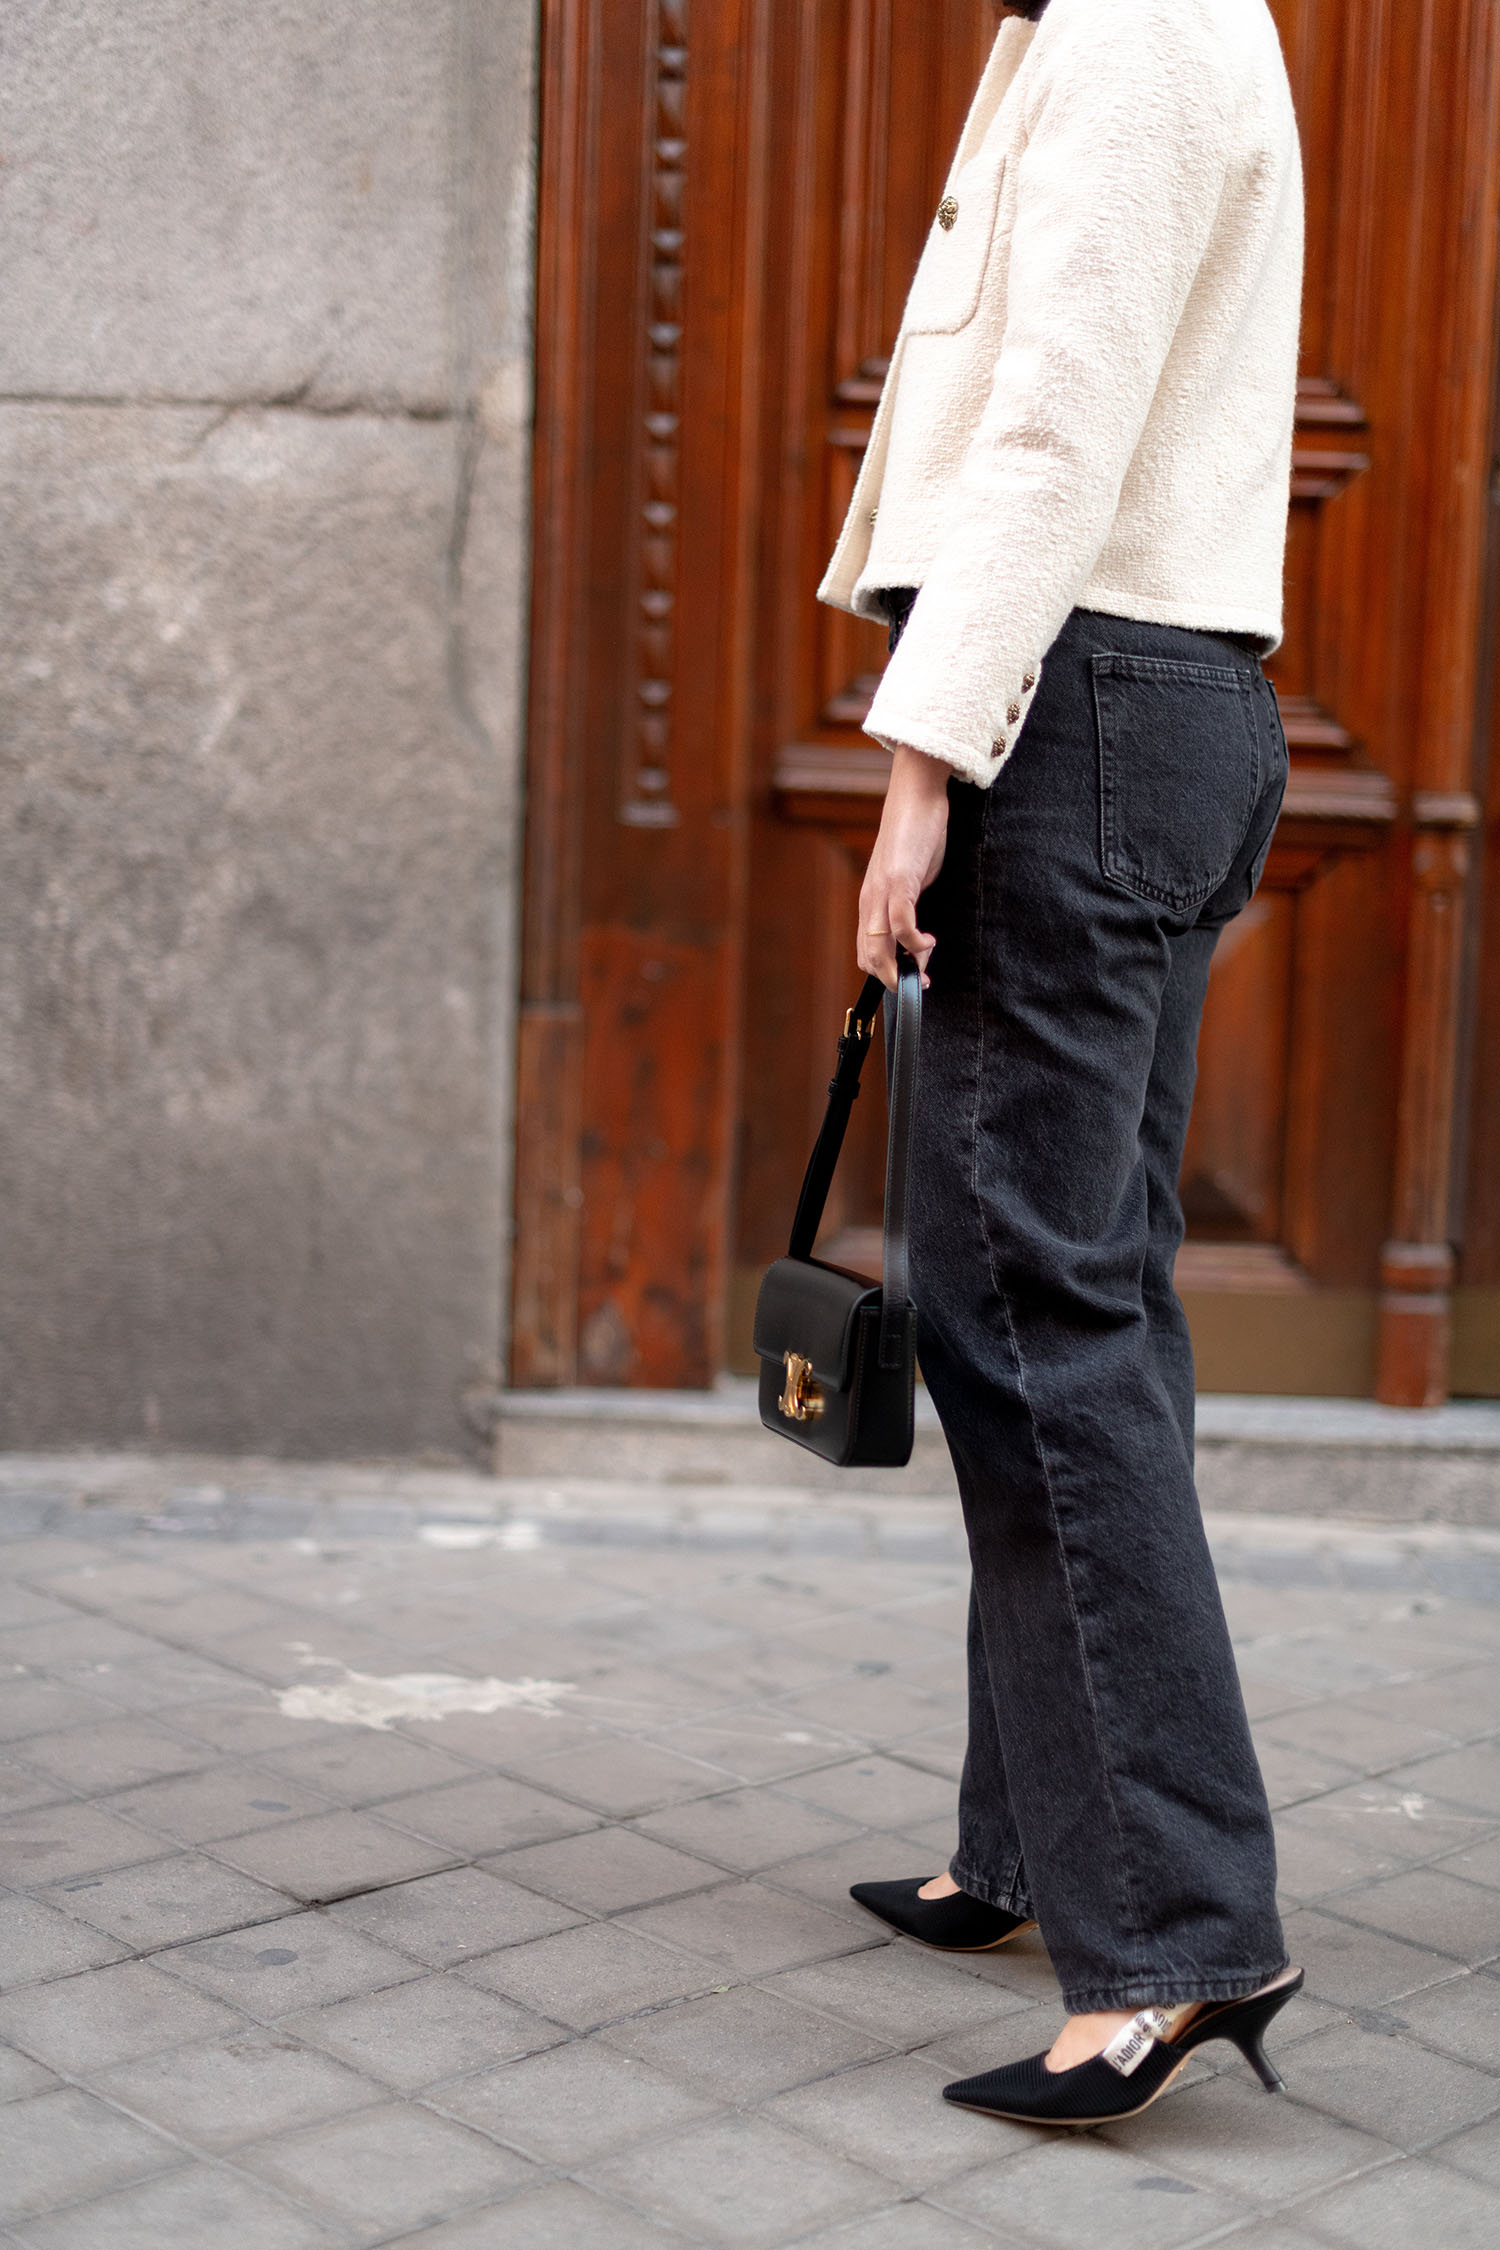 Coco & Voltaire - Dior J'Adior kitten heel pumps, Celine Triomphe handbag, H&M straight low jeans